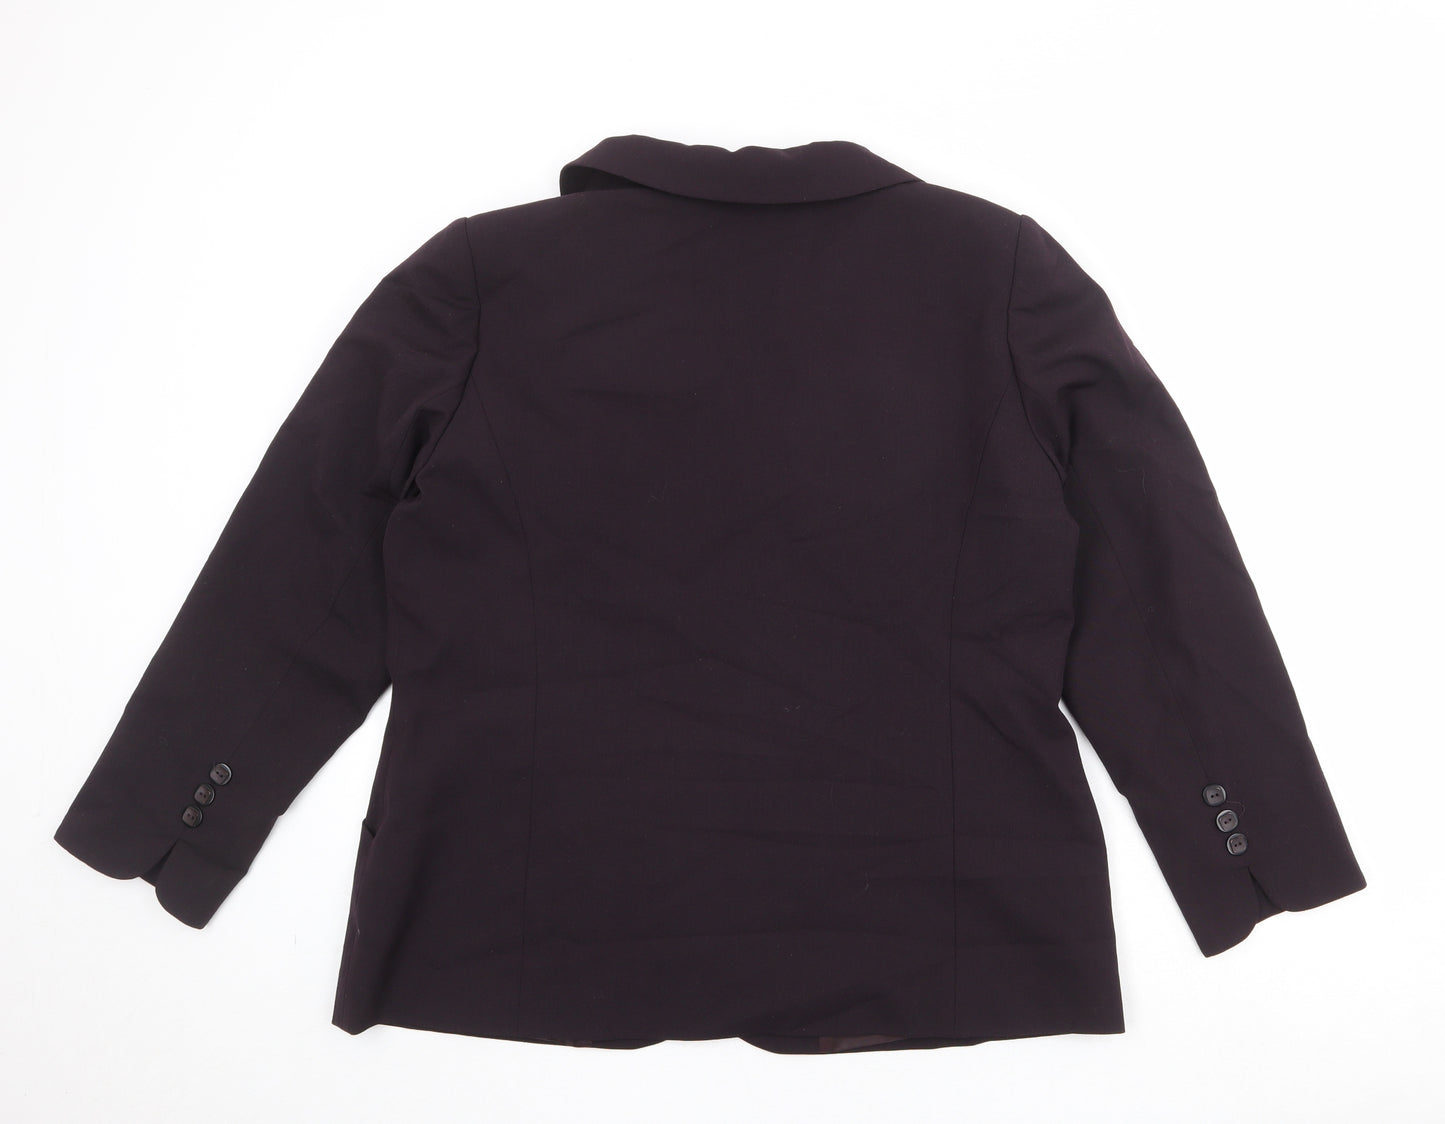 Penny Plain Womens Purple Polyester Jacket Blazer Size 18